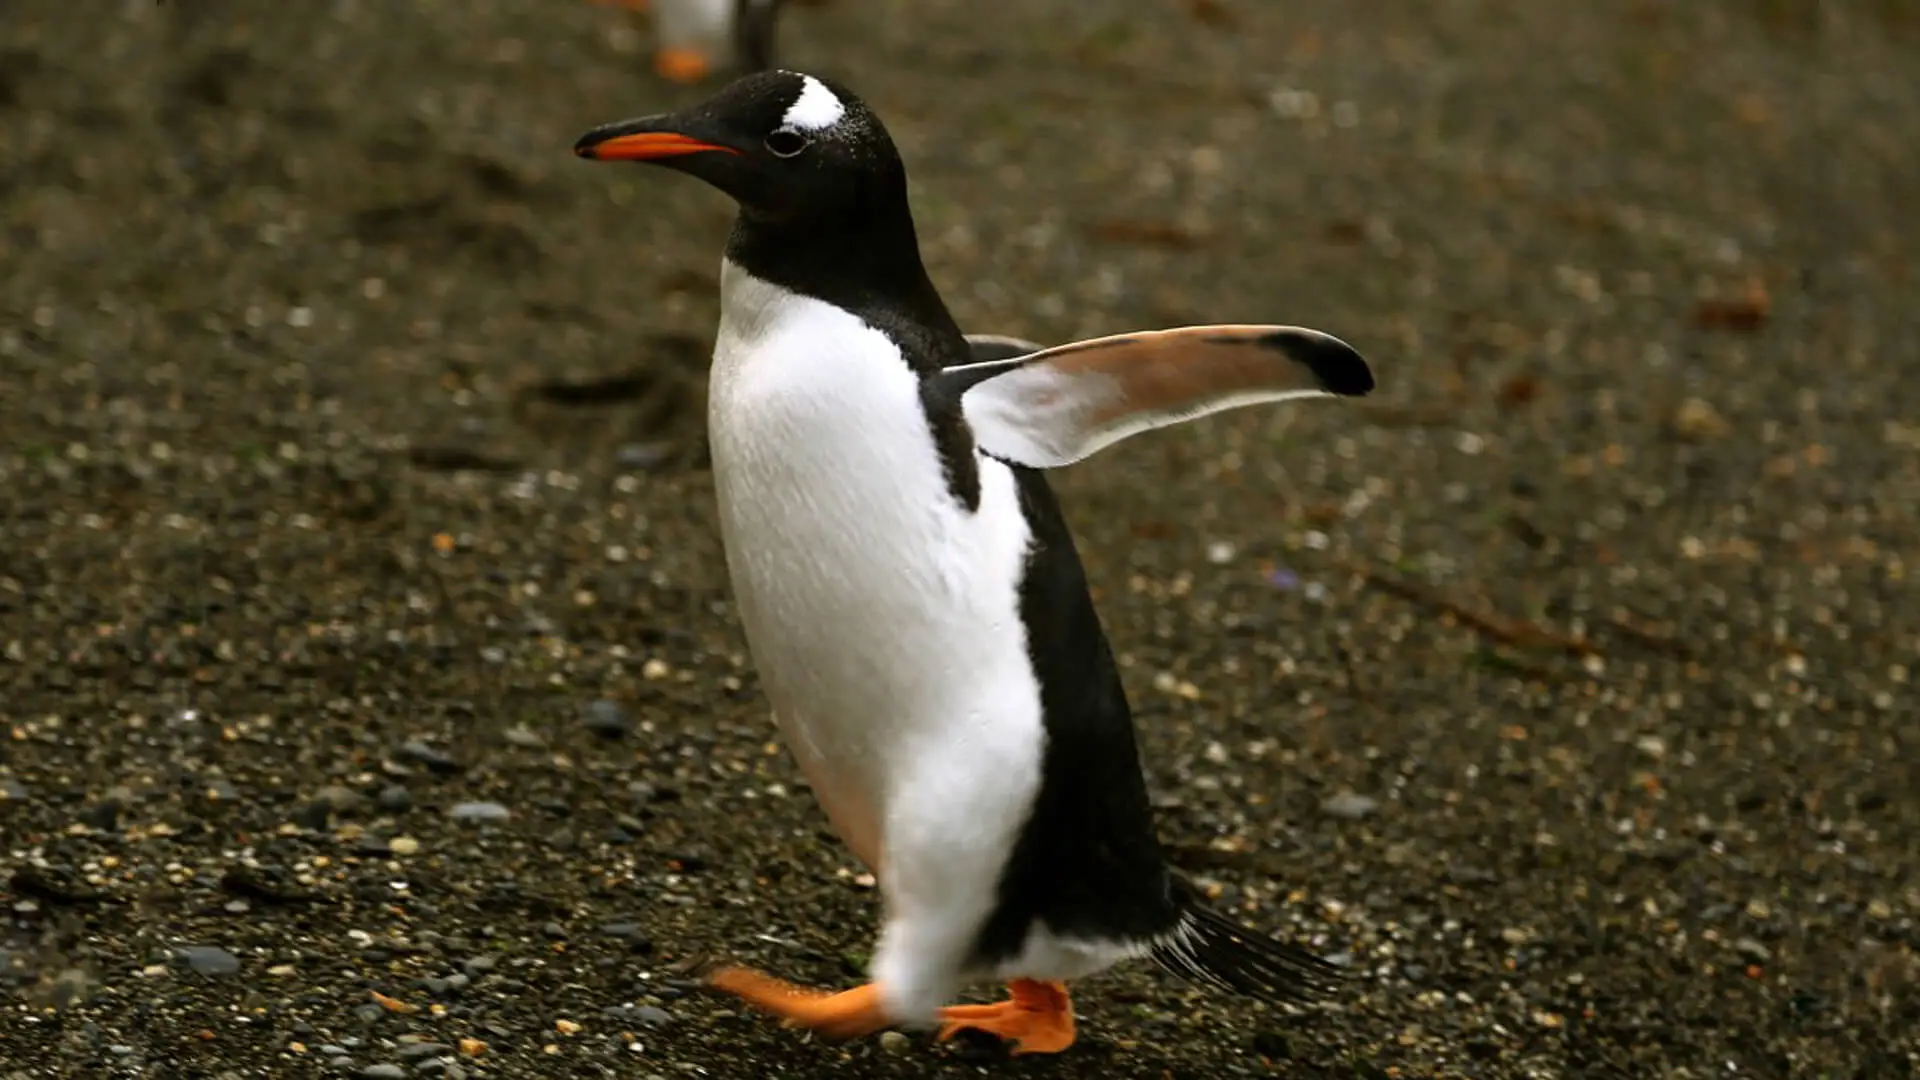 Pingüinos en Ushuaia